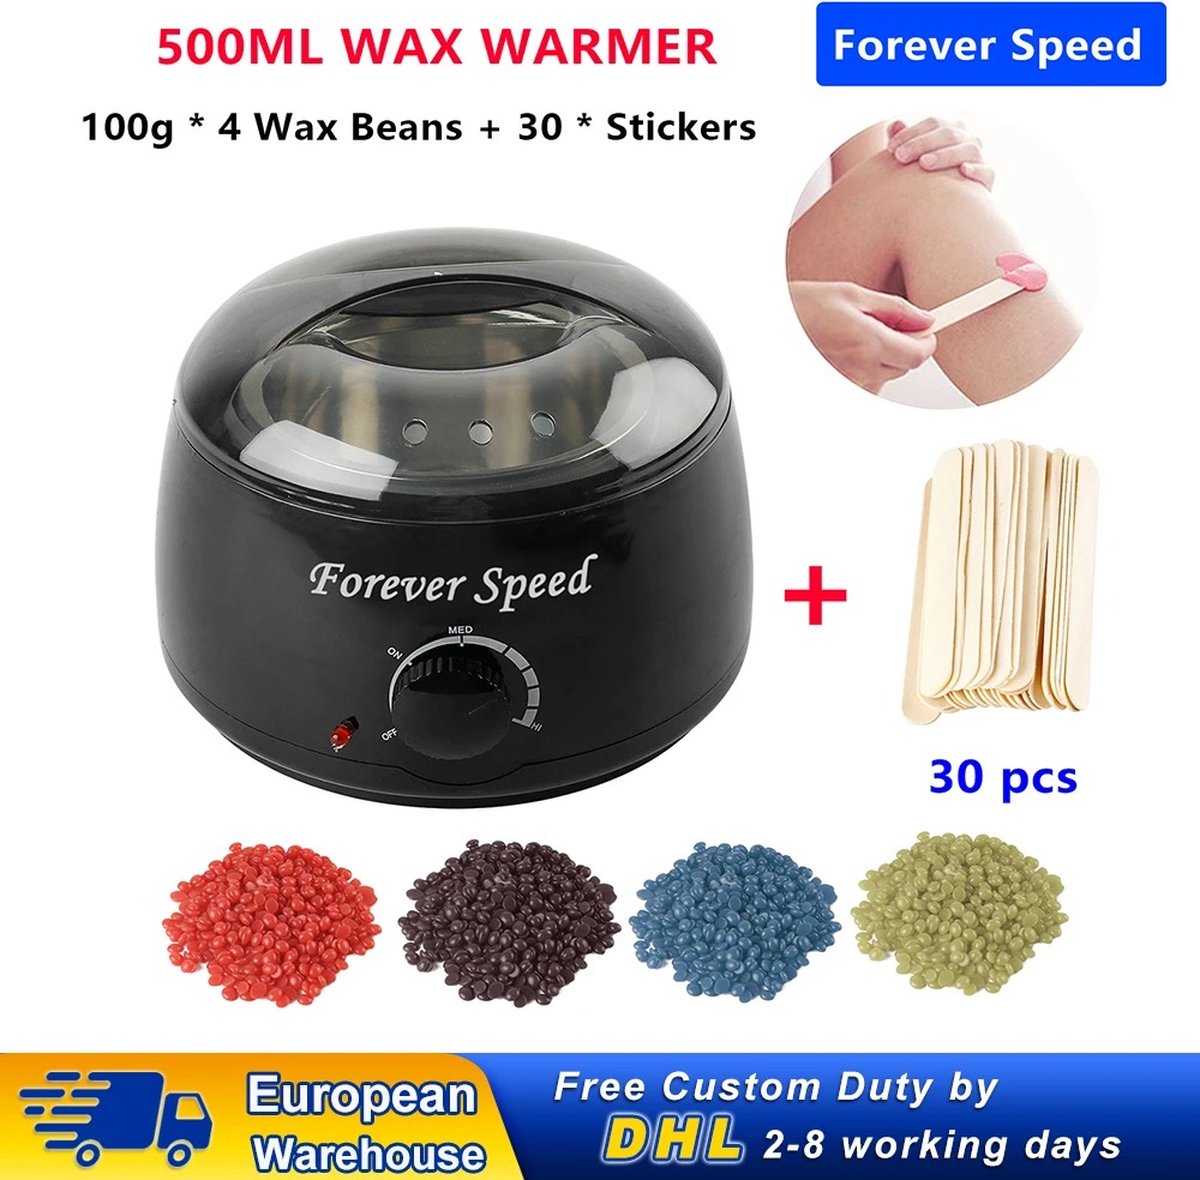 Svdm - Wax Apparaat - Ontharingsapparaat - Ontharing - Wax Verwarmer - Inclusief Wax Beans - Inclusief Spatels - 500ml - Zwart